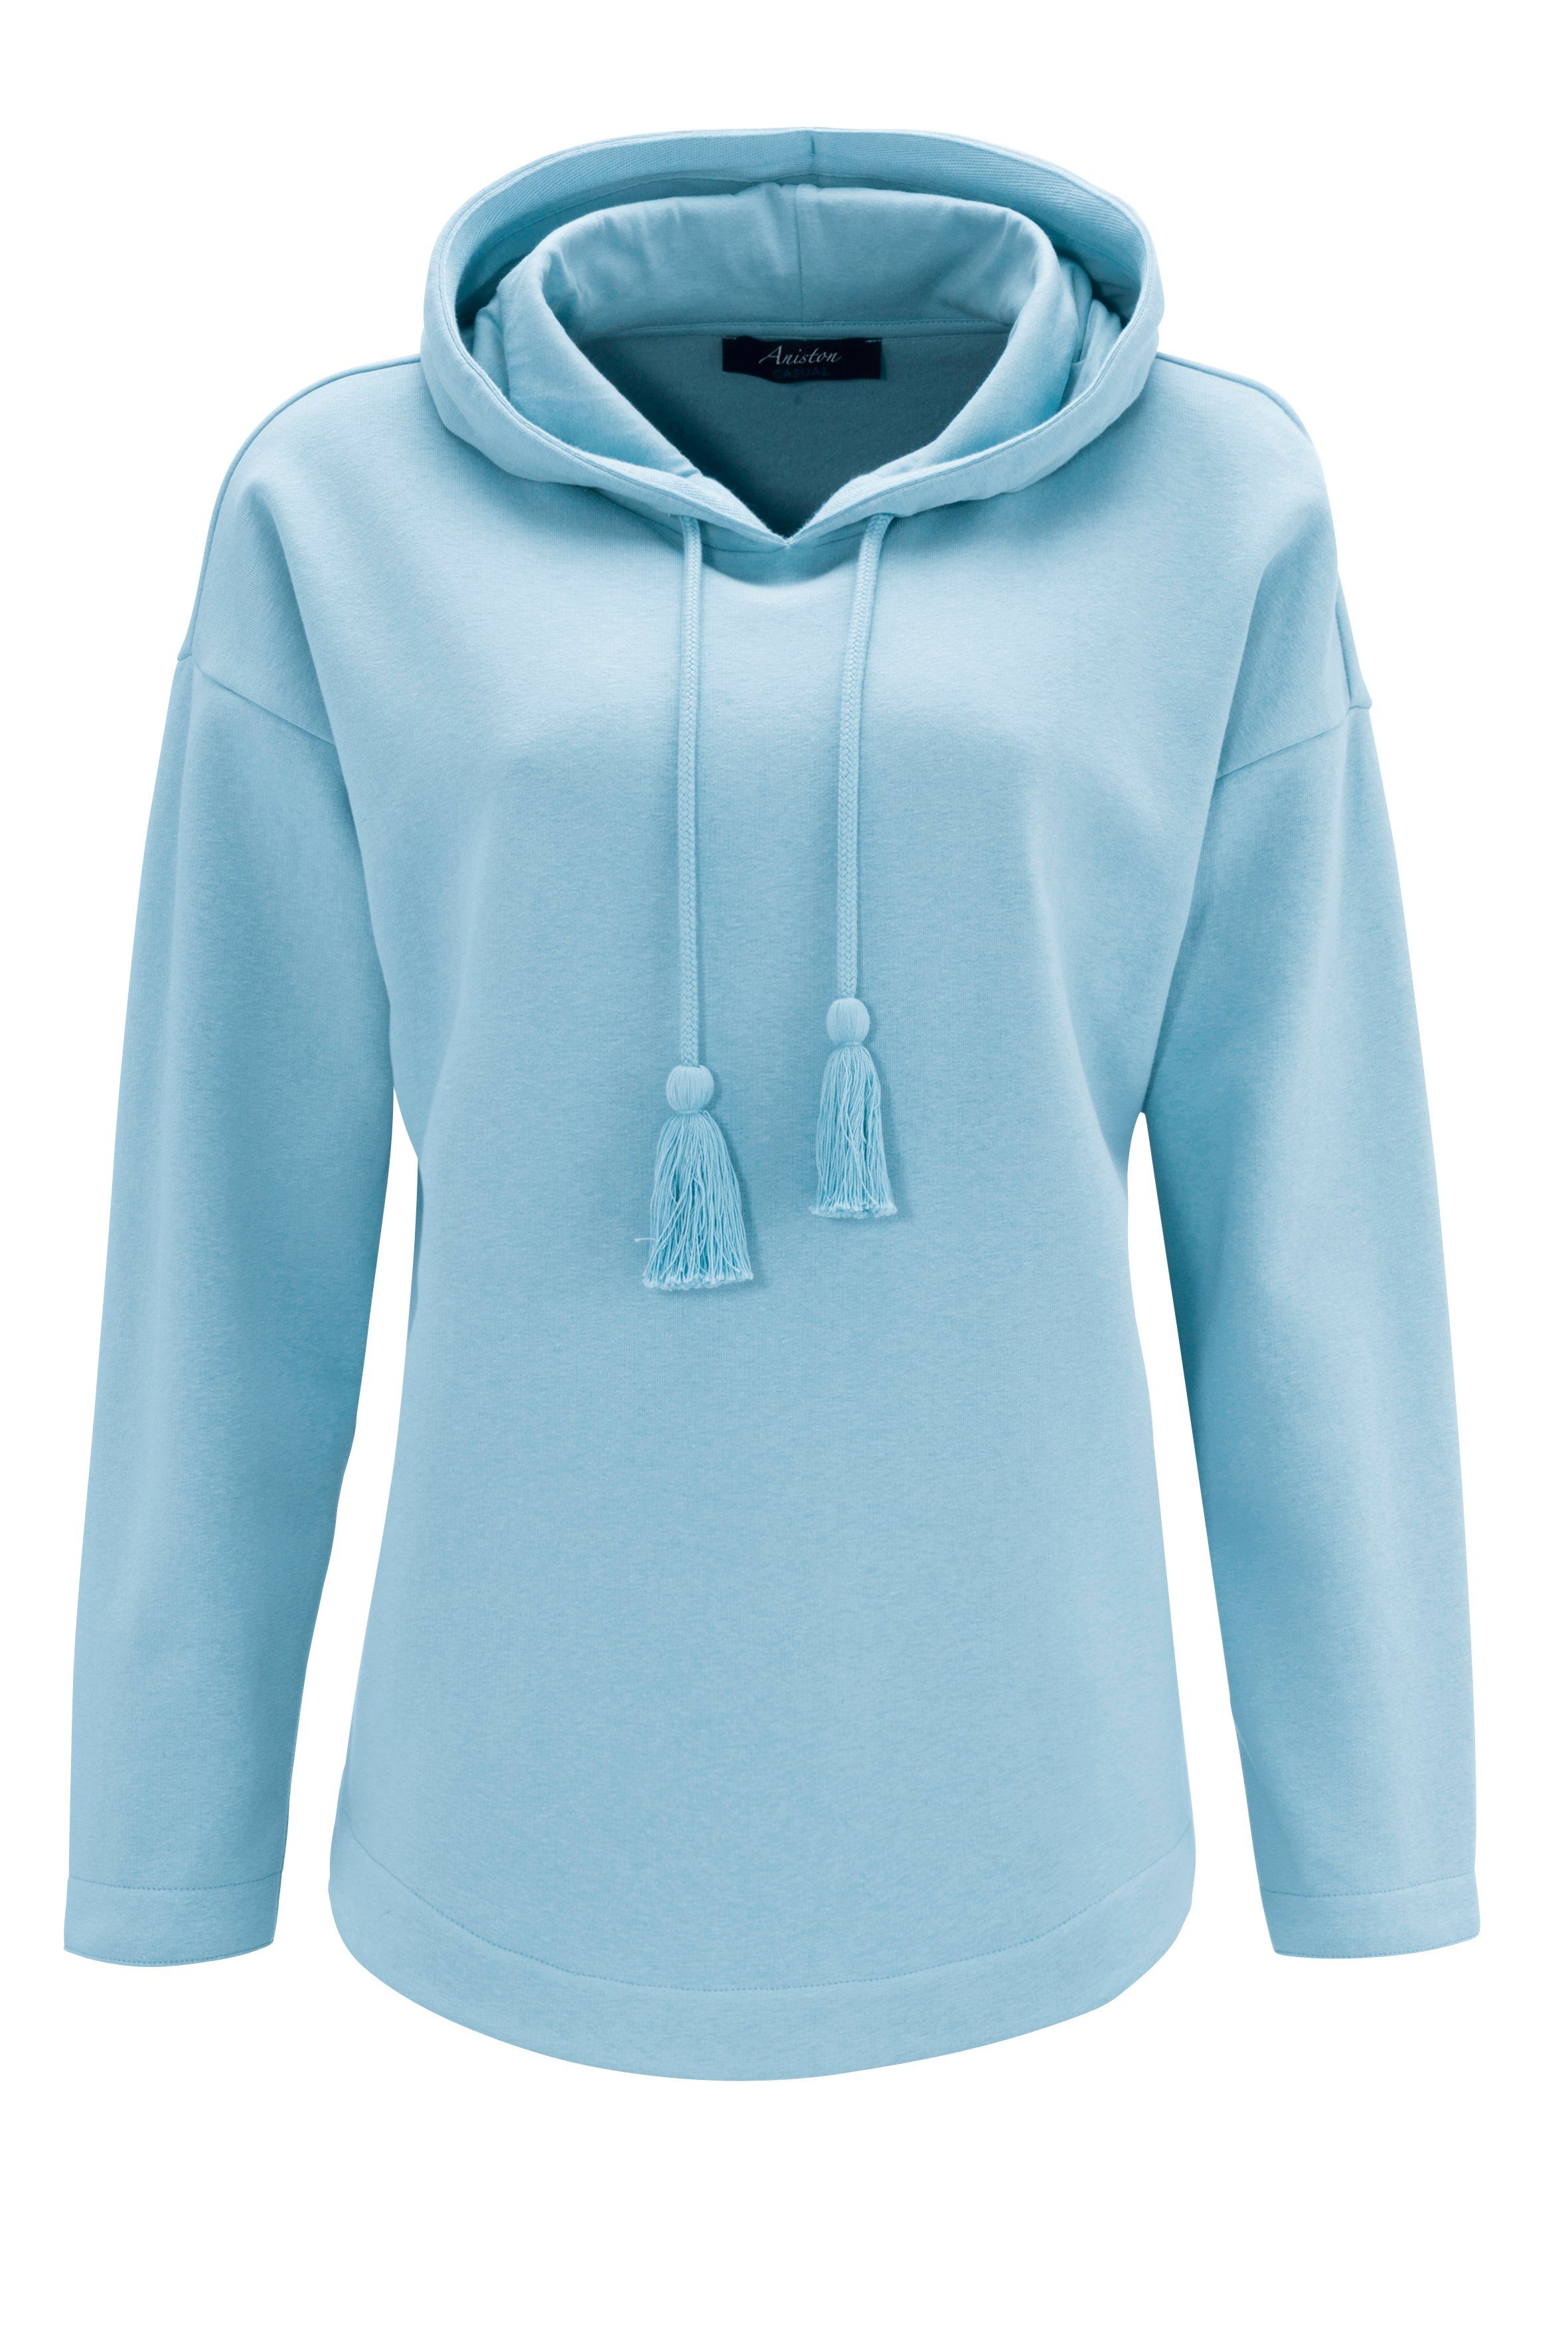 CASUAL Sweatshirt regulierbar Aniston mit Kordeln hellblau dekorativen Kapuze